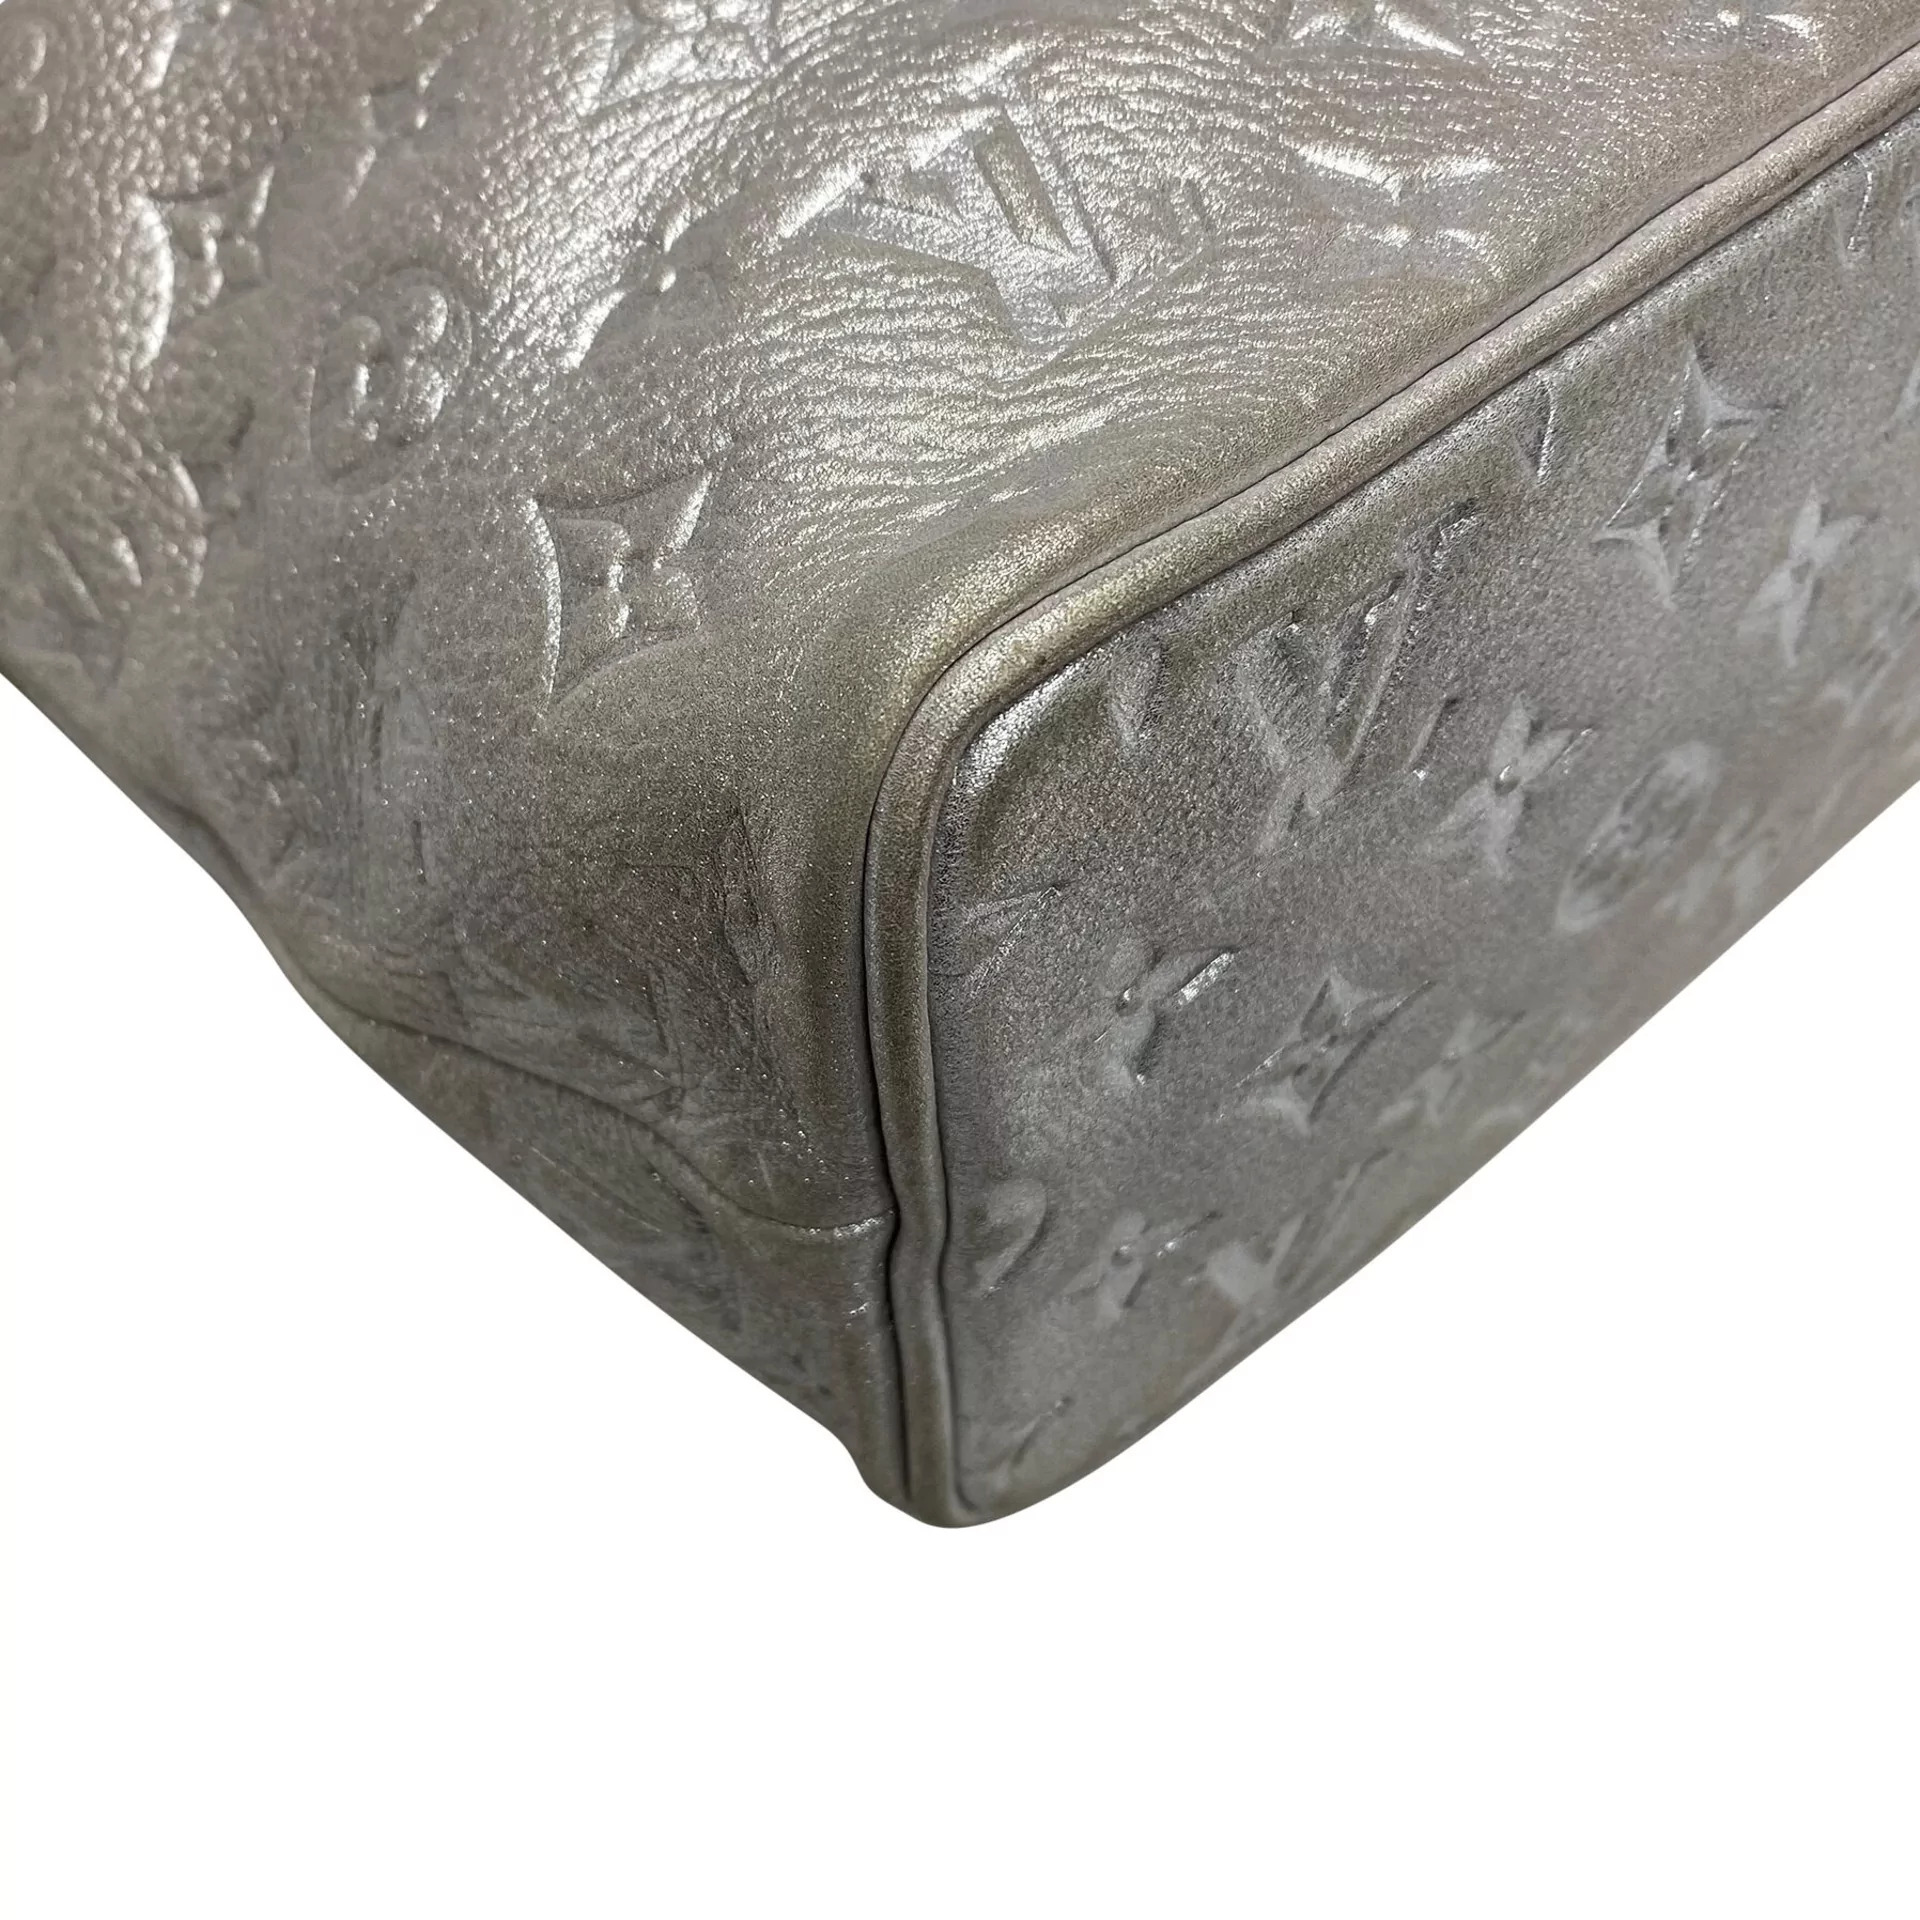 Bolsa Louis Vuitton Monogram Shimmer Halo Silver Metalizada